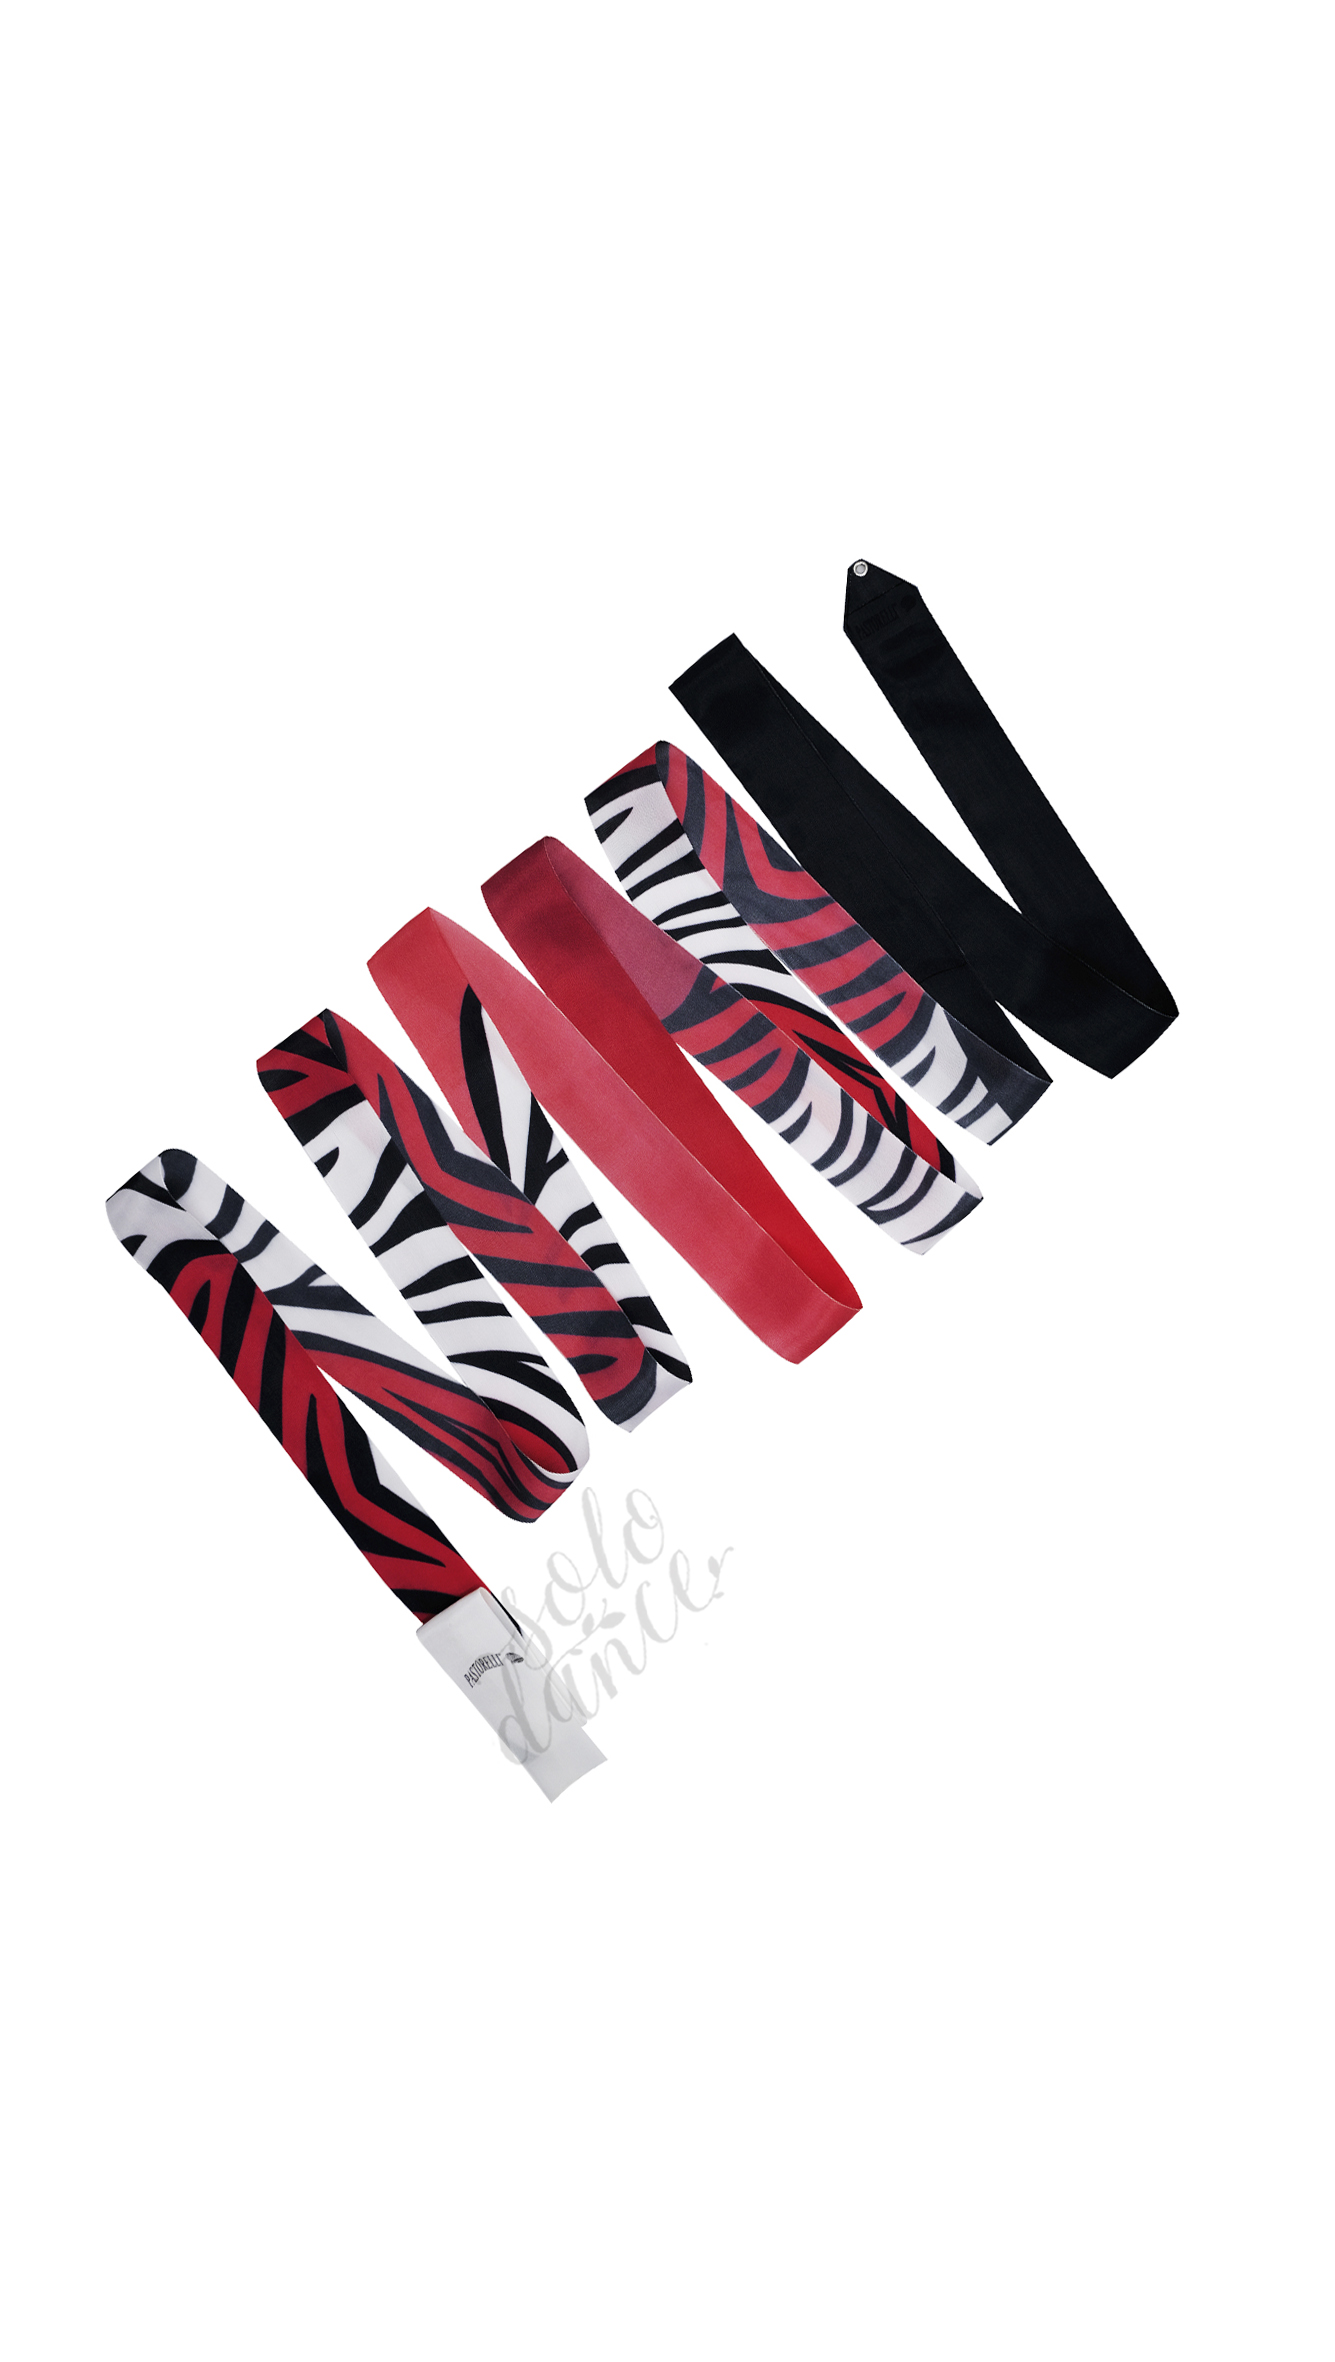 Pastorelli Antigua ARCHE' gymnastic ribbon 5 m 05978 Zebra Black-Red-White FIG